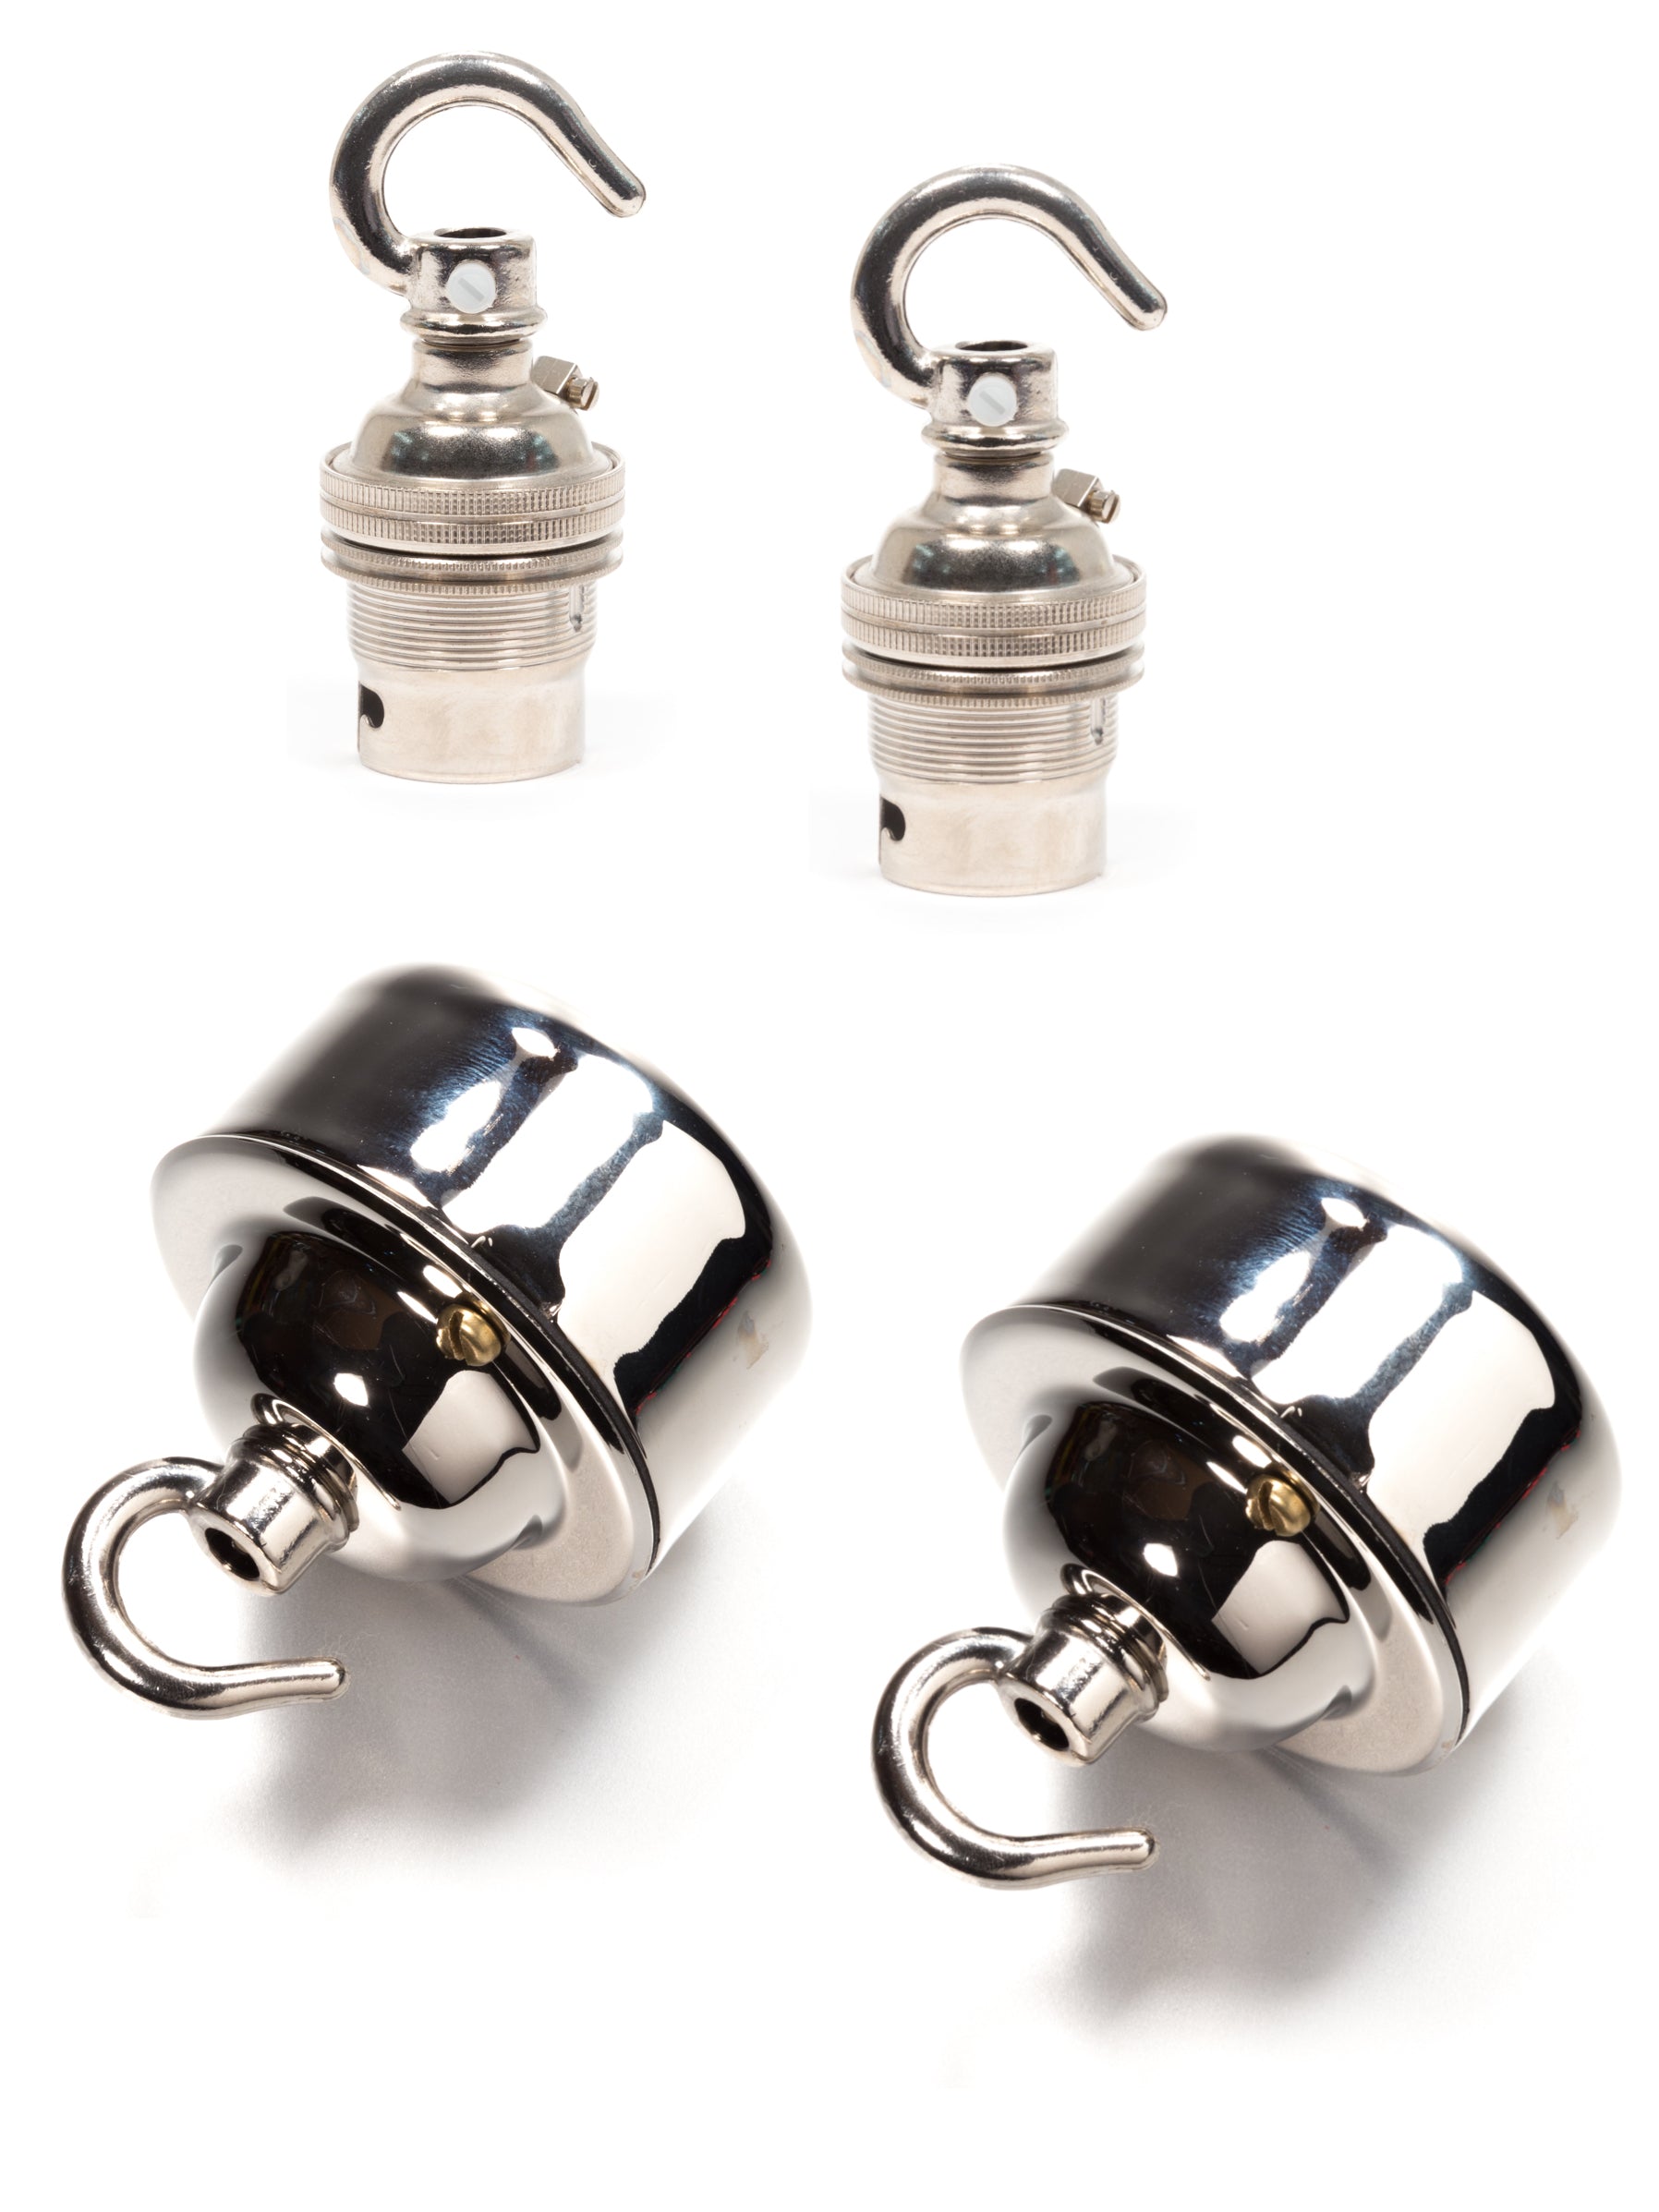 Silver Hooked Pattress & B22 Lamp Holder Bundle | End-Of-Line